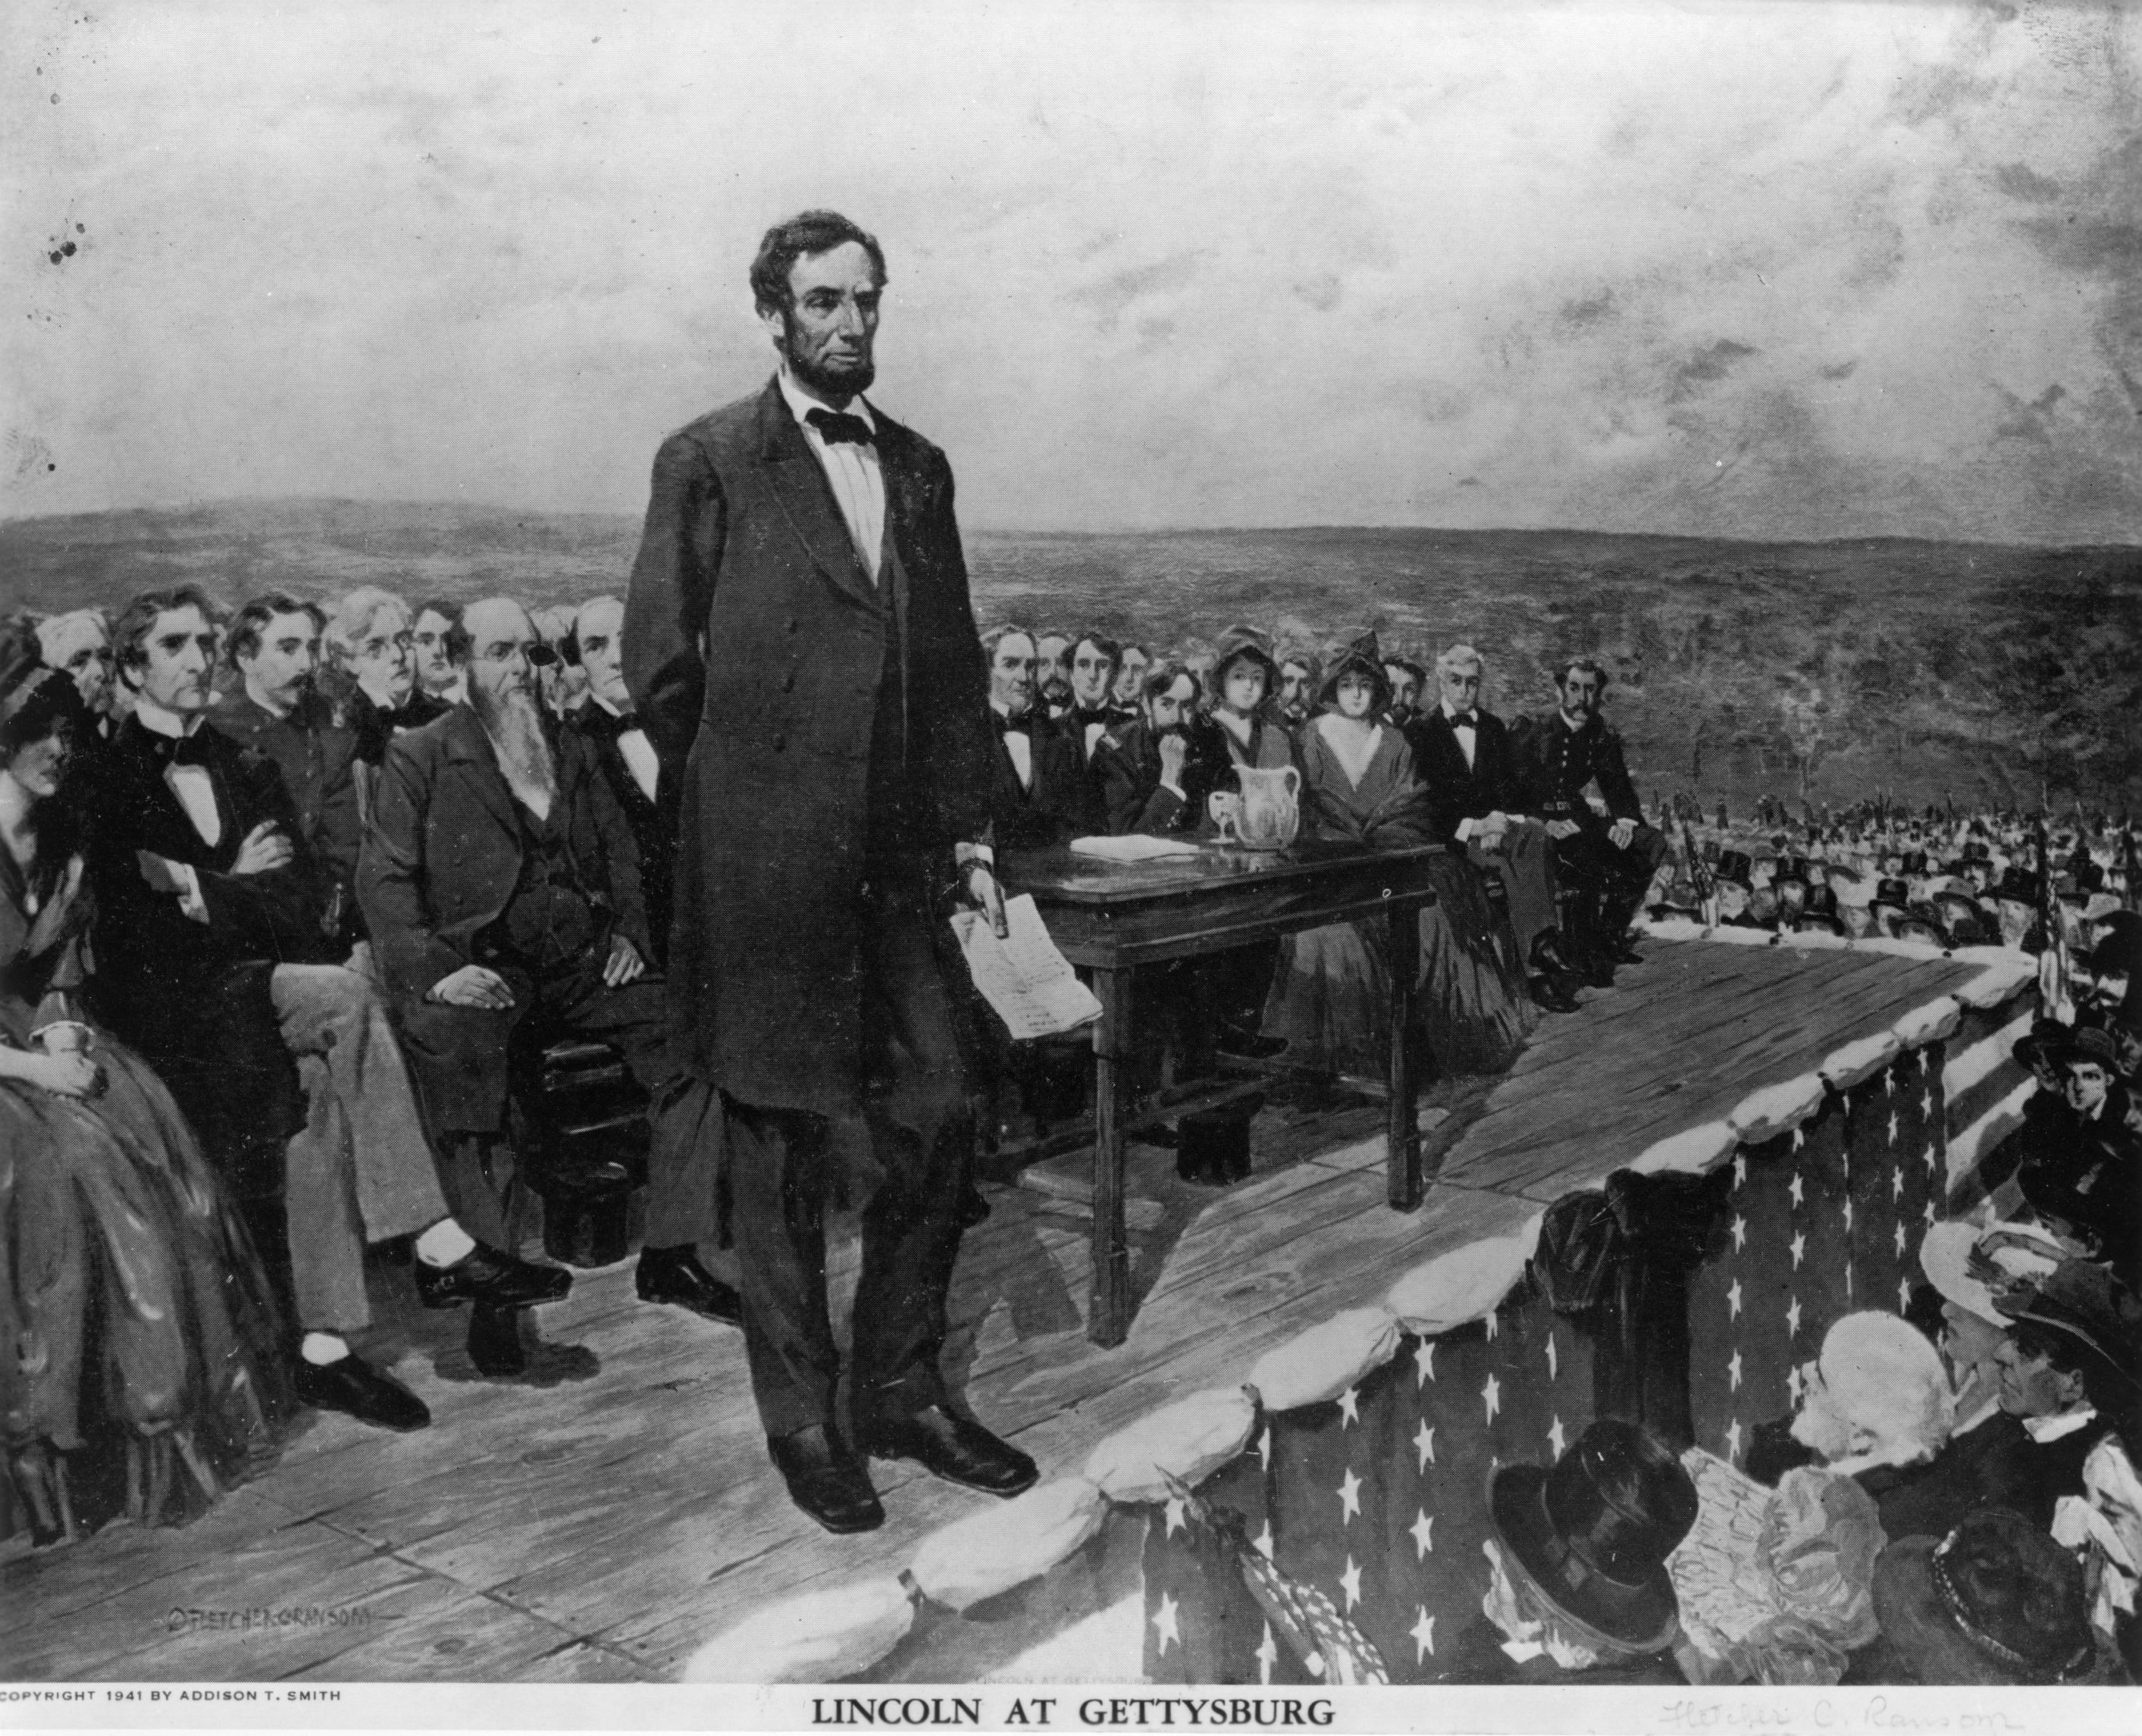 President Abraham Lincoln Biography